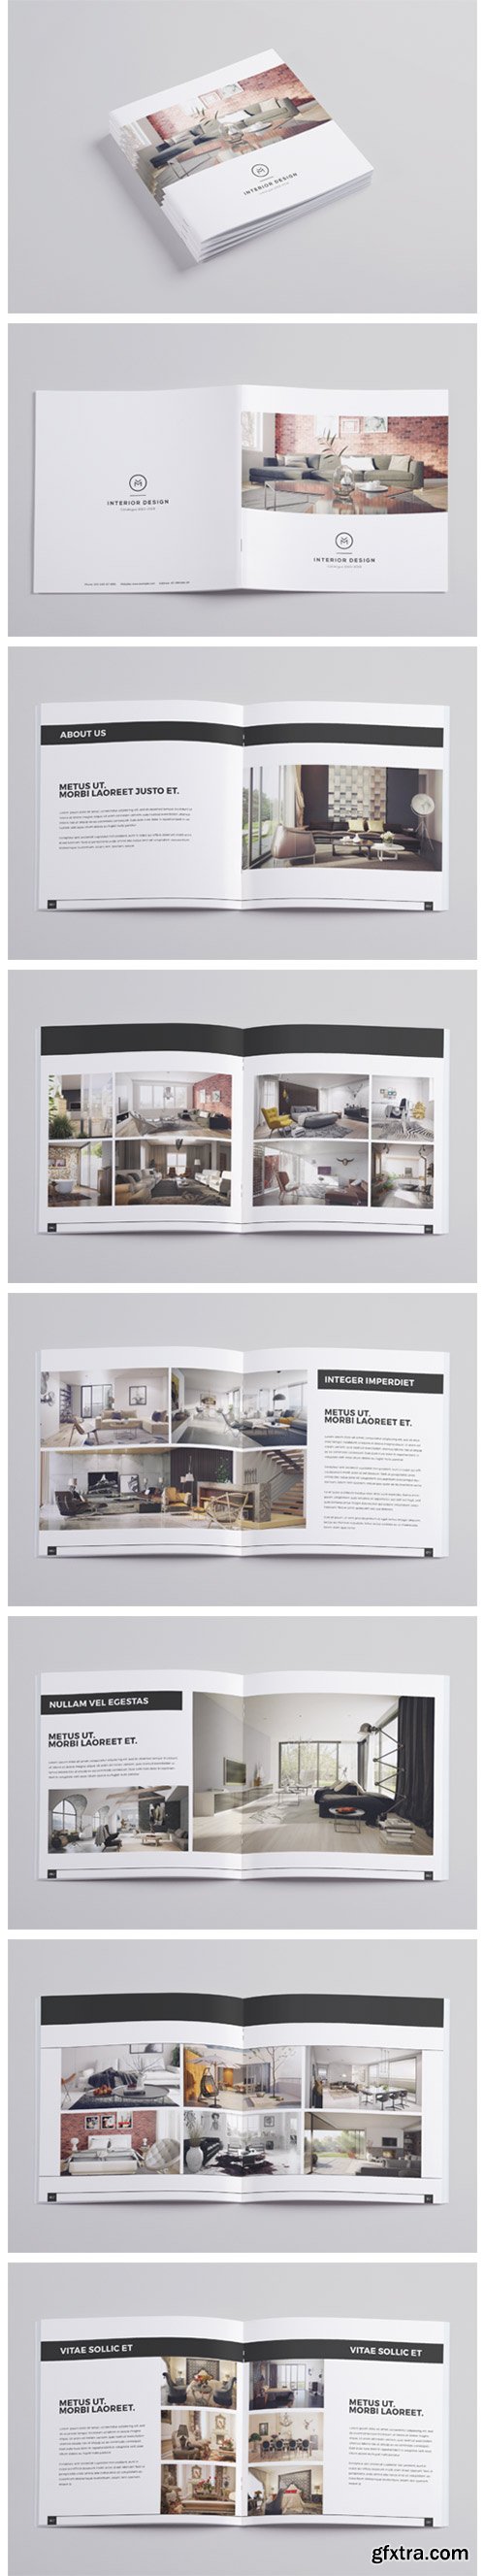 Minimal Interior Design Brochure 3916719